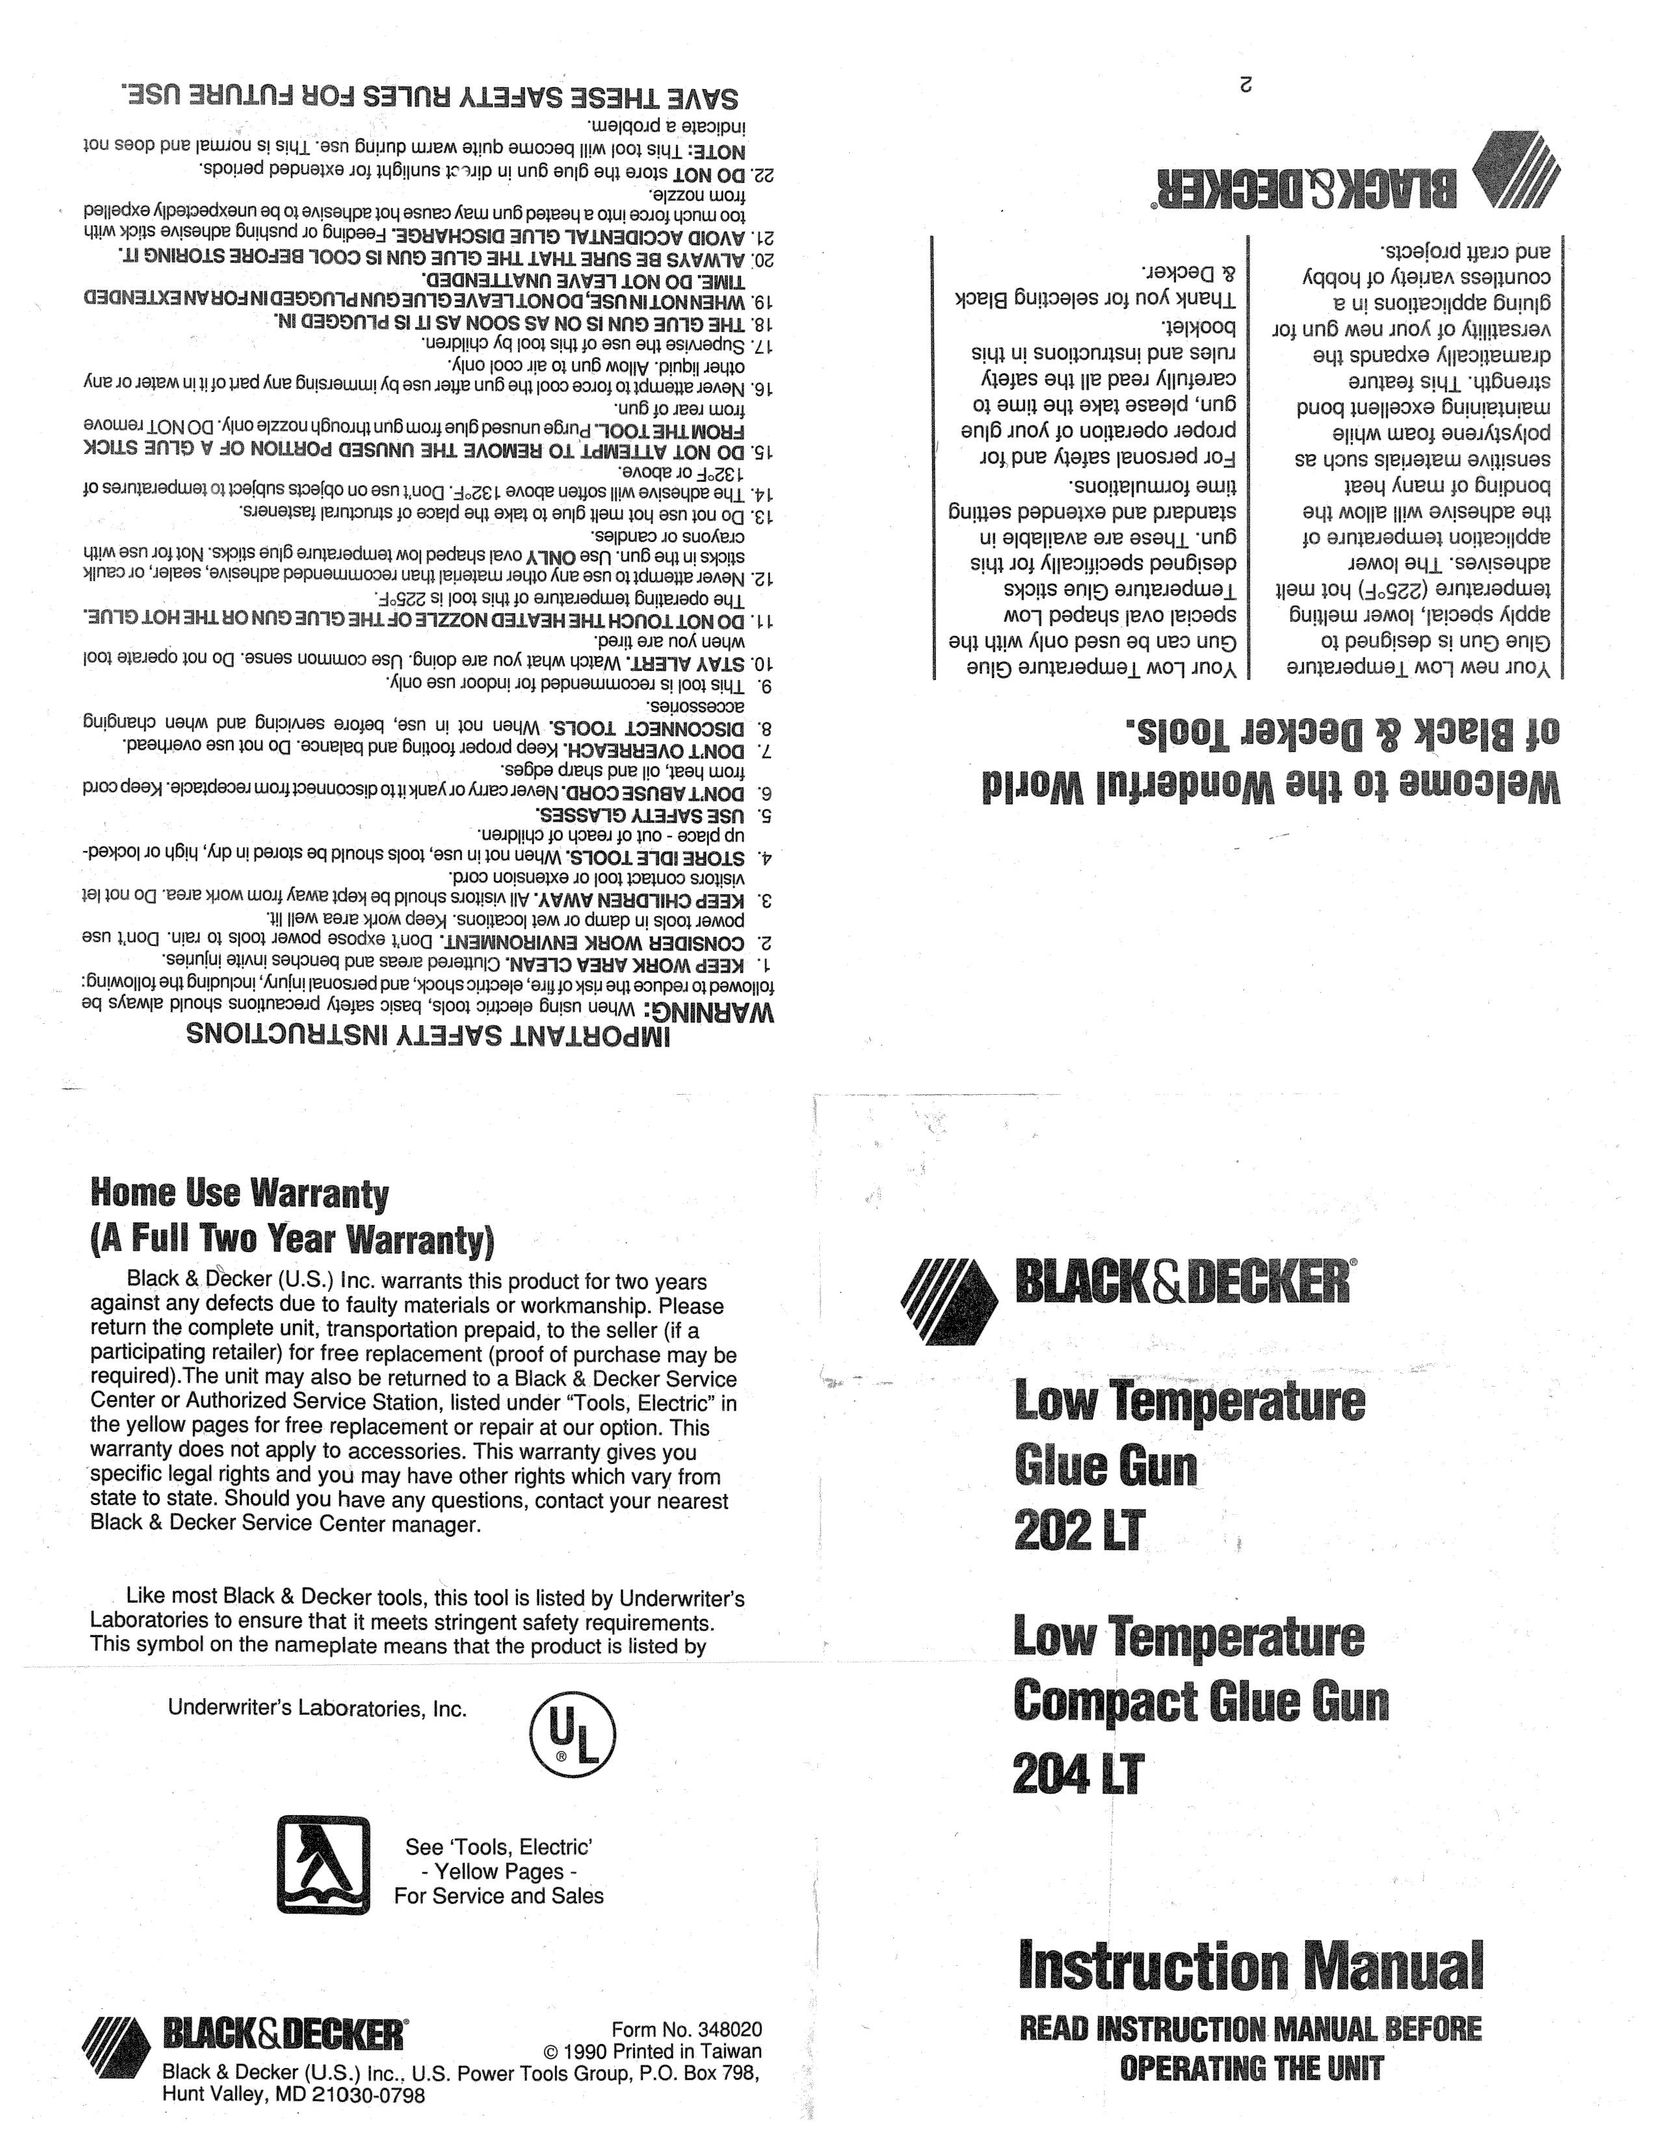 Black & Decker 204 LT Glue Gun User Manual